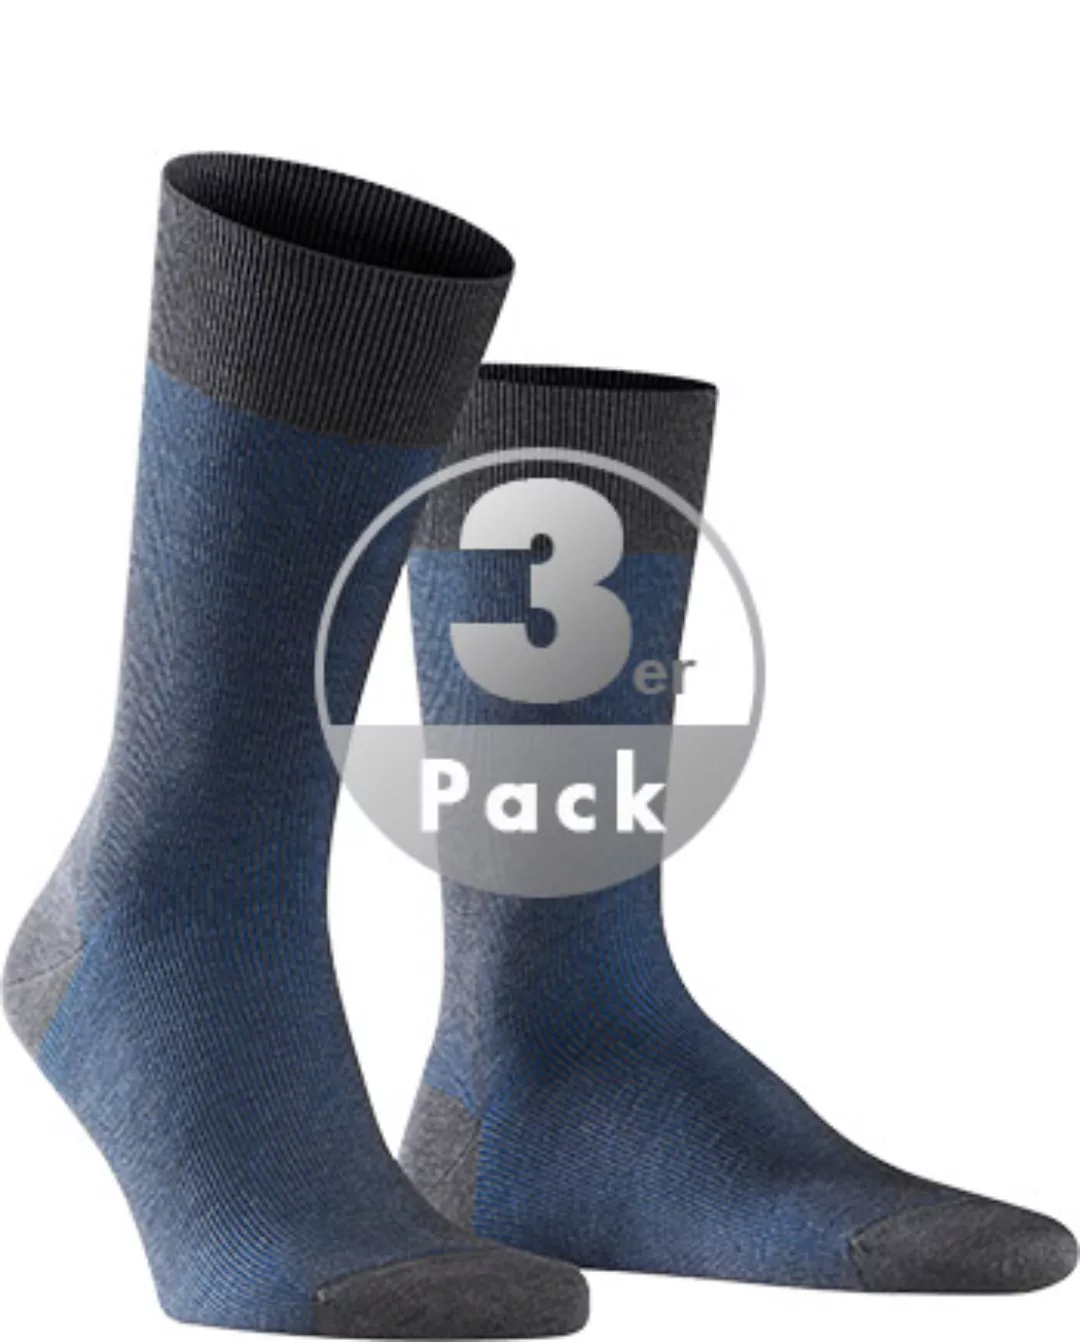 Falke Fine Shadow Socken 3er-Pack 13141/3194 günstig online kaufen